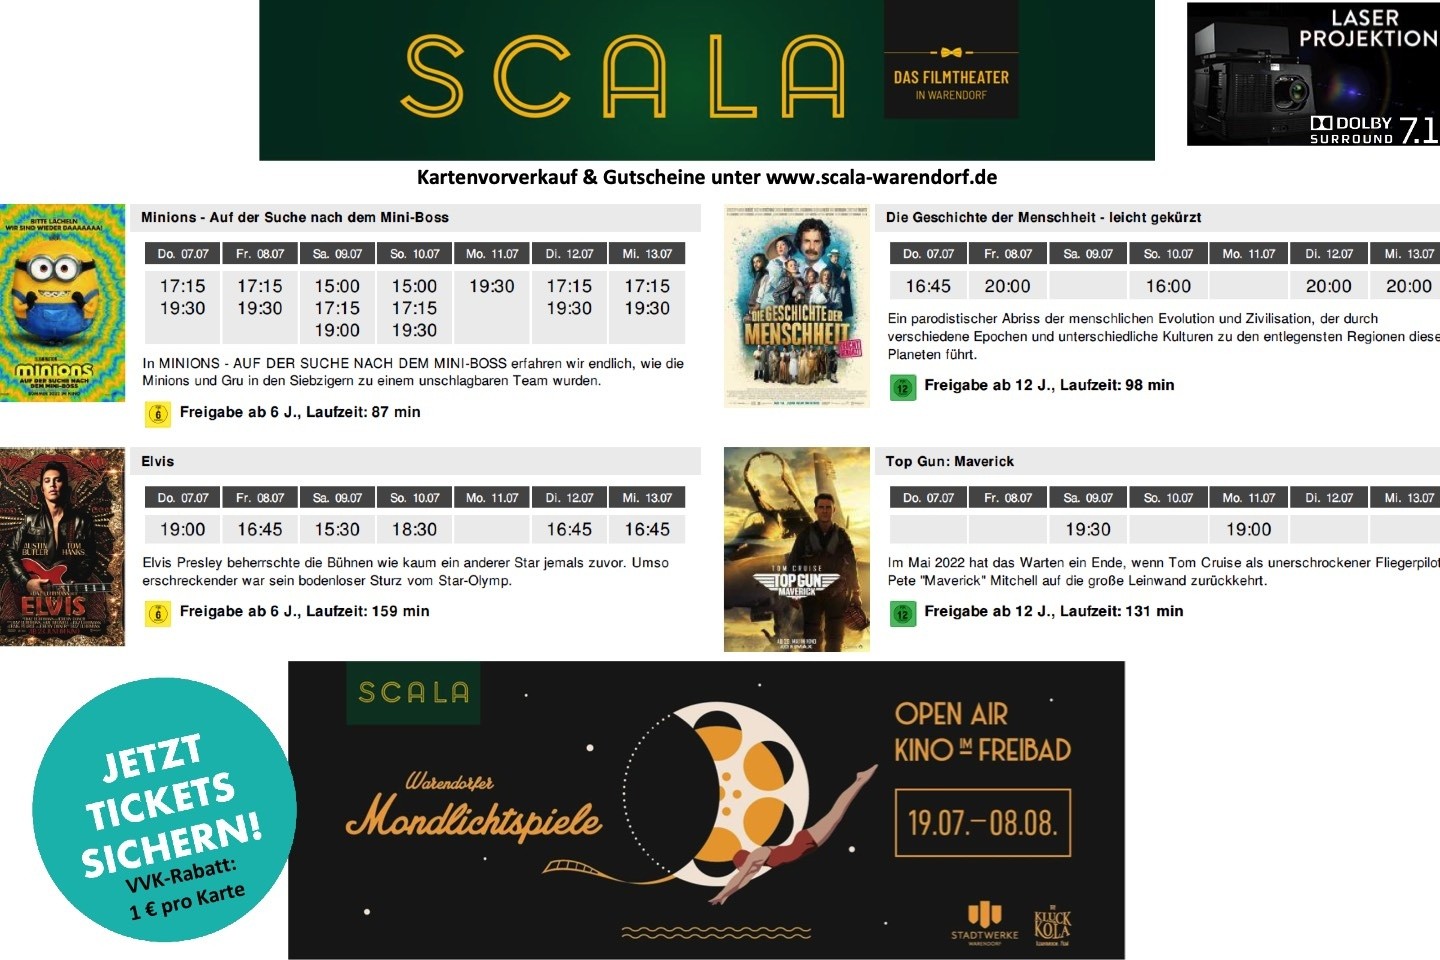 Kino,Kinoprogramm,Scala Filmtheater,Warendorf